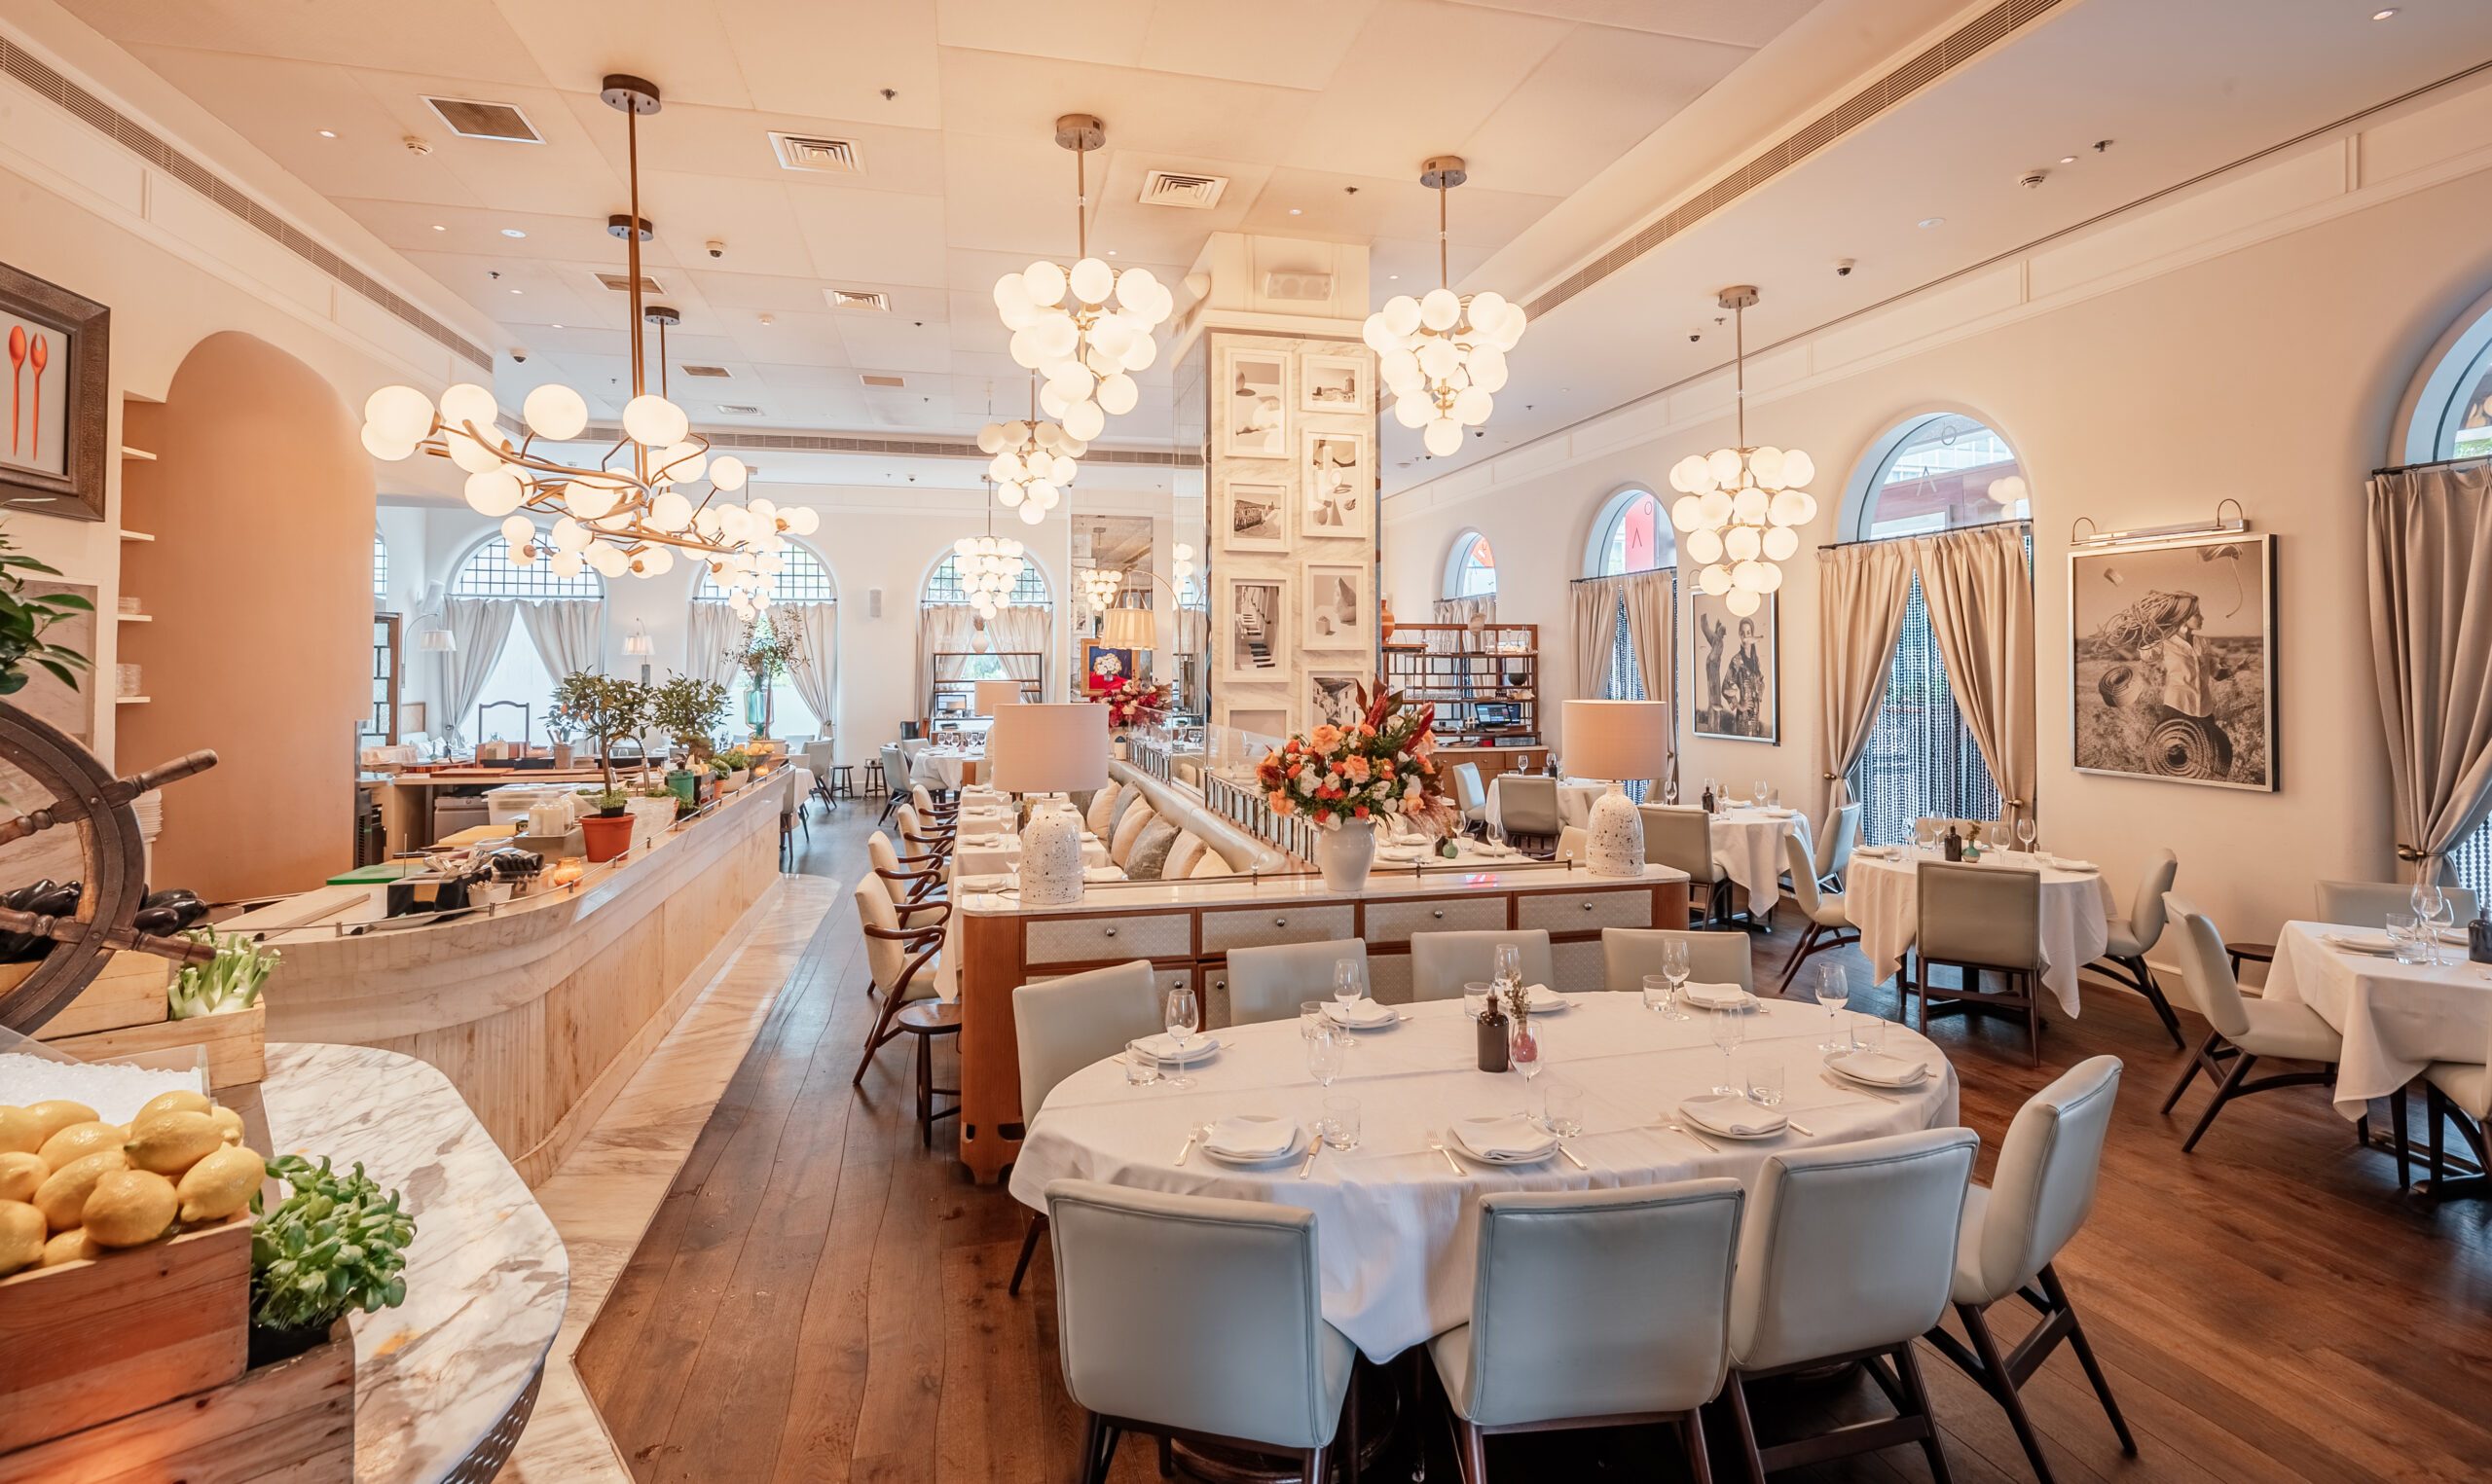 'In this business, Dubai already rivals London, New York and Paris,' says Gaia restaurant owner Evgeny Kuzin